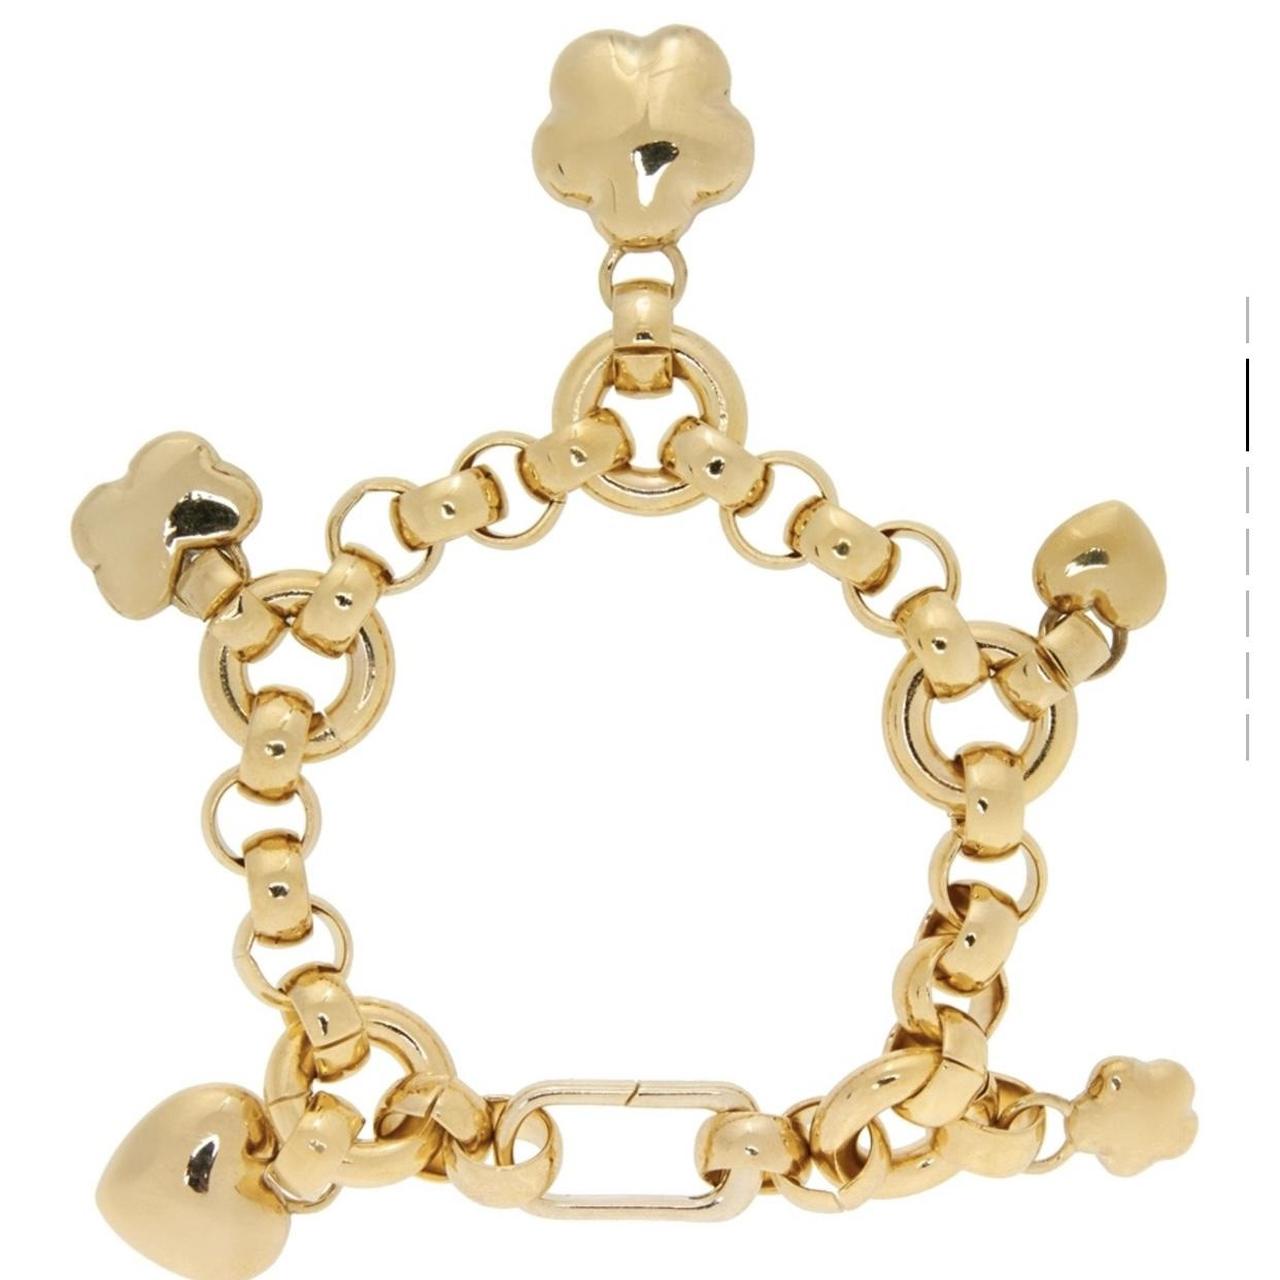 Laura Lombardi Gold Fiorella Charm Bracelet, worn a... - Depop